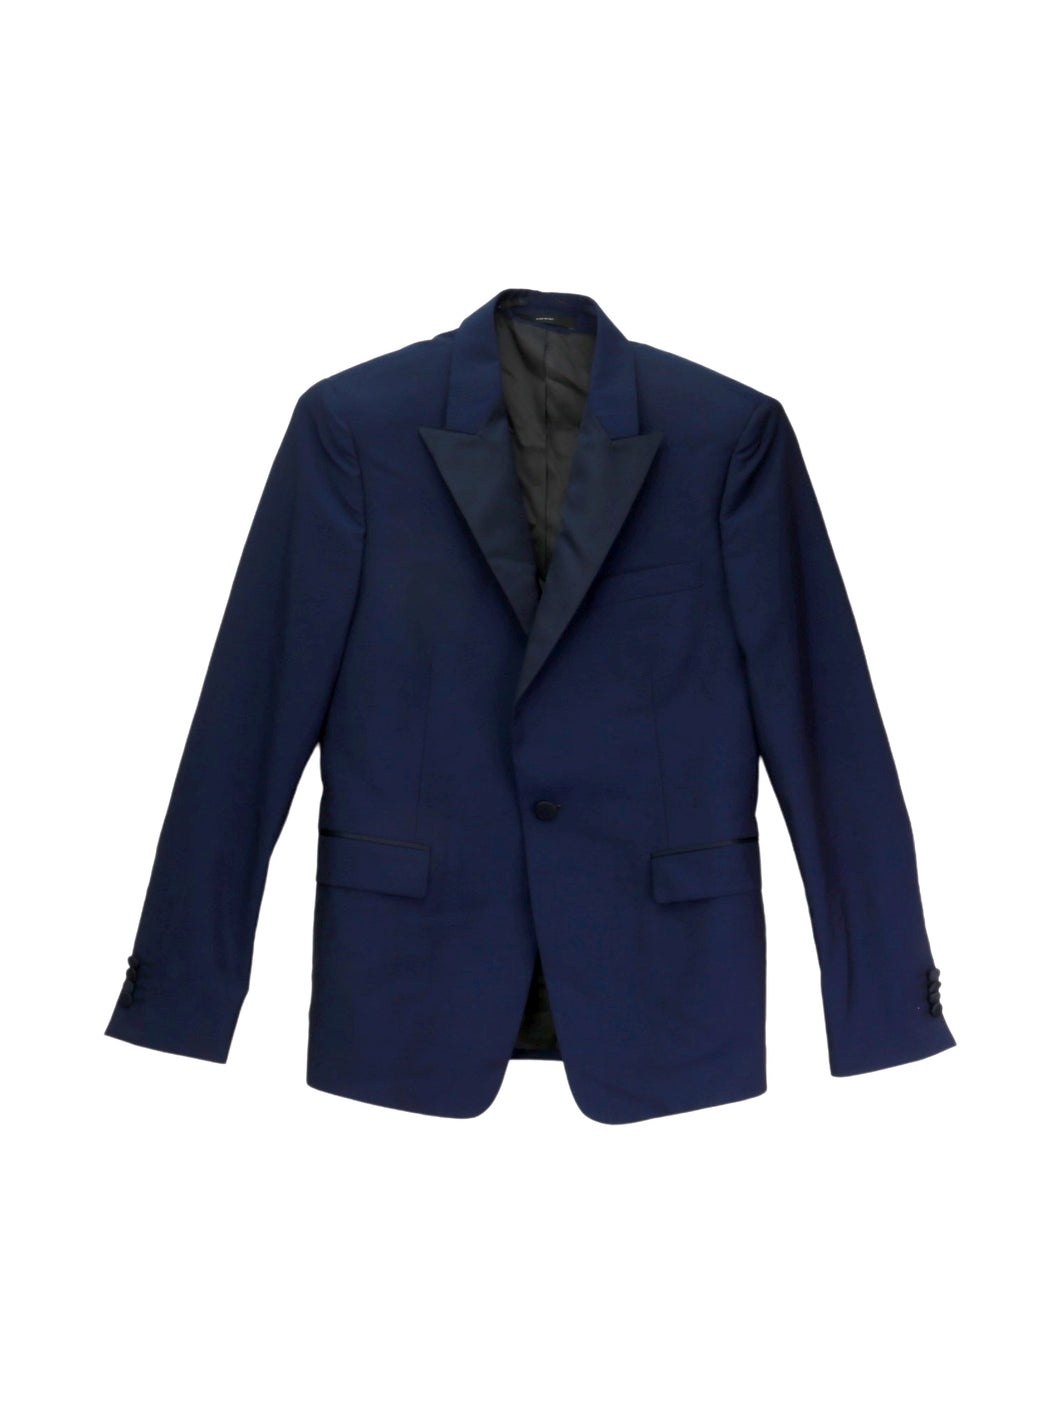 Paul Smith Men's Navy Gents Slim Fit Evening Jacket Sport Coats & Blazer - 38 US / 48 EU